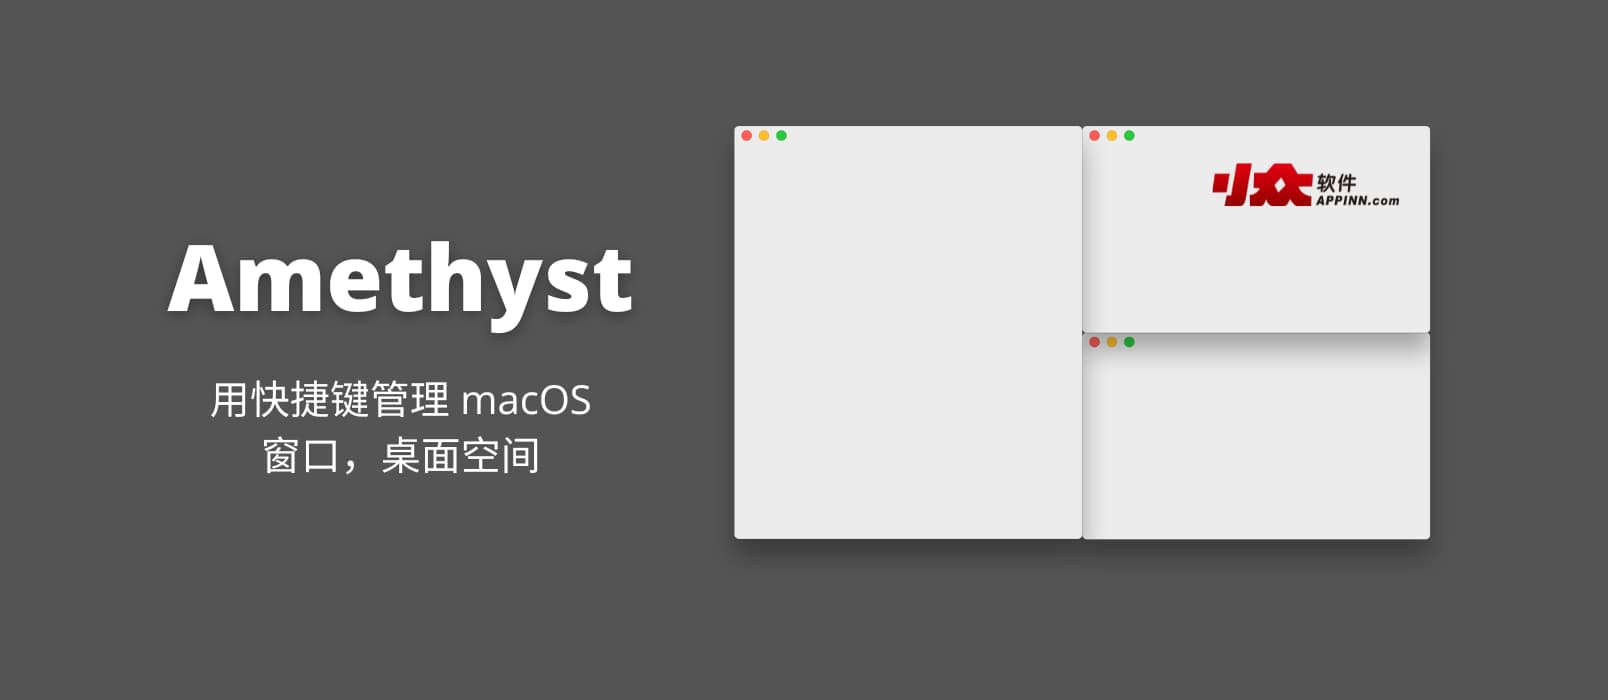 Amethyst - 平铺式窗口布局工具，用快捷键管理 macOS 窗口，桌面空间